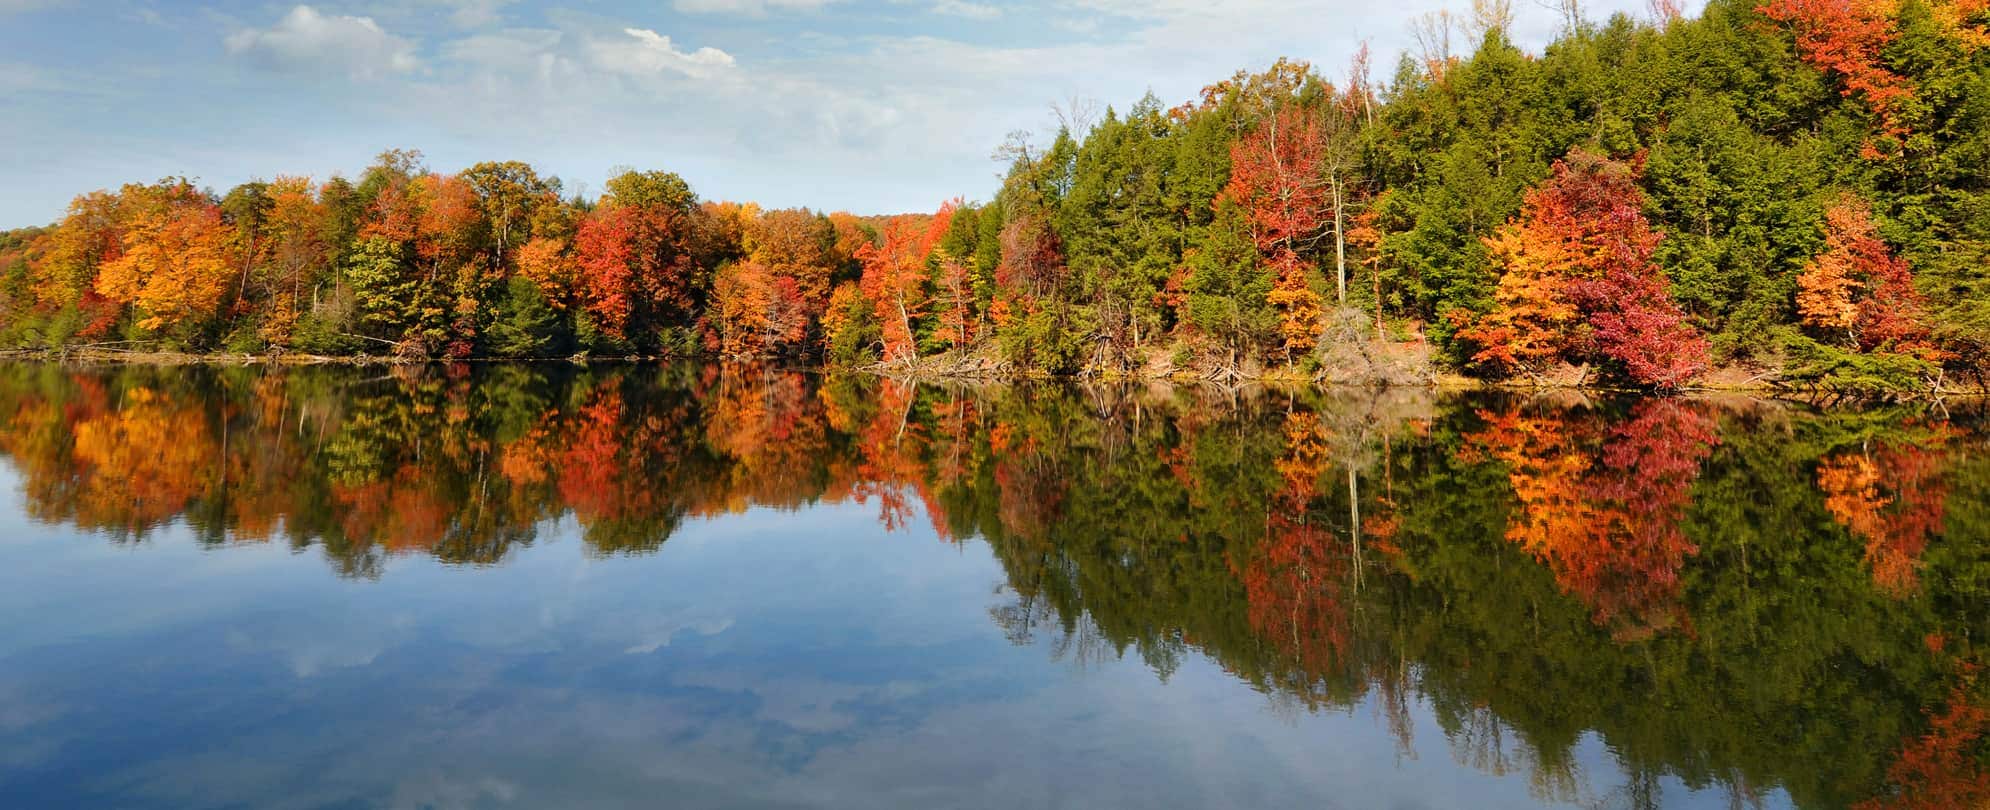 Lake view of scenic New England Fall foliage